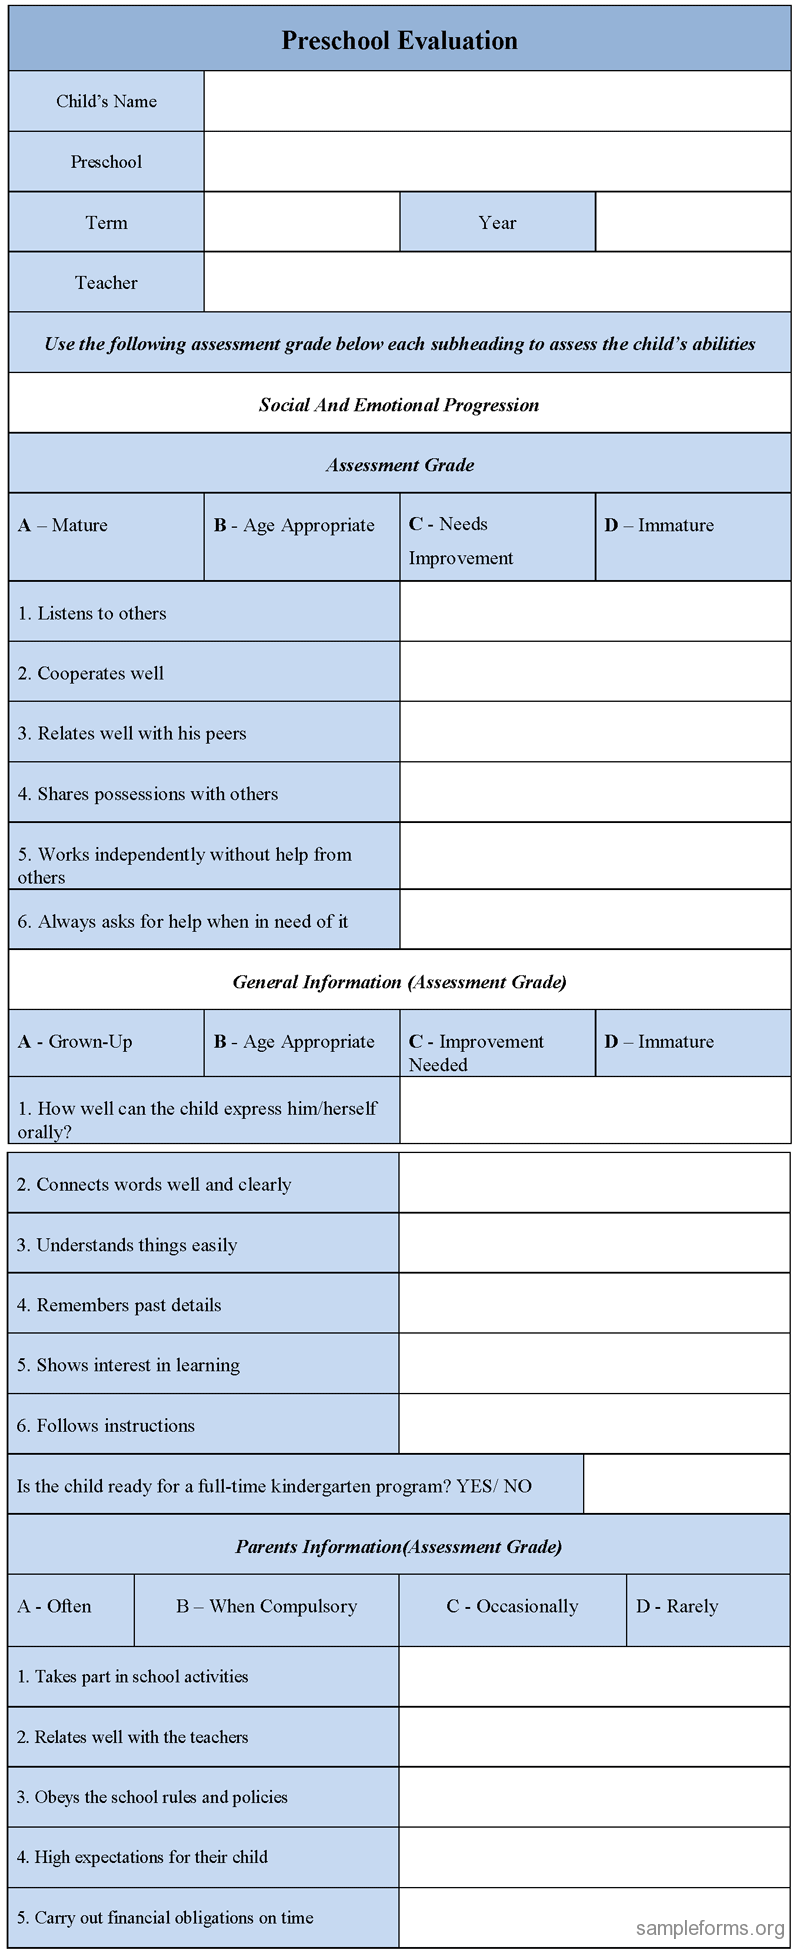 Free Printable Preschool Teacher Evaluation Forms - Expectare Info